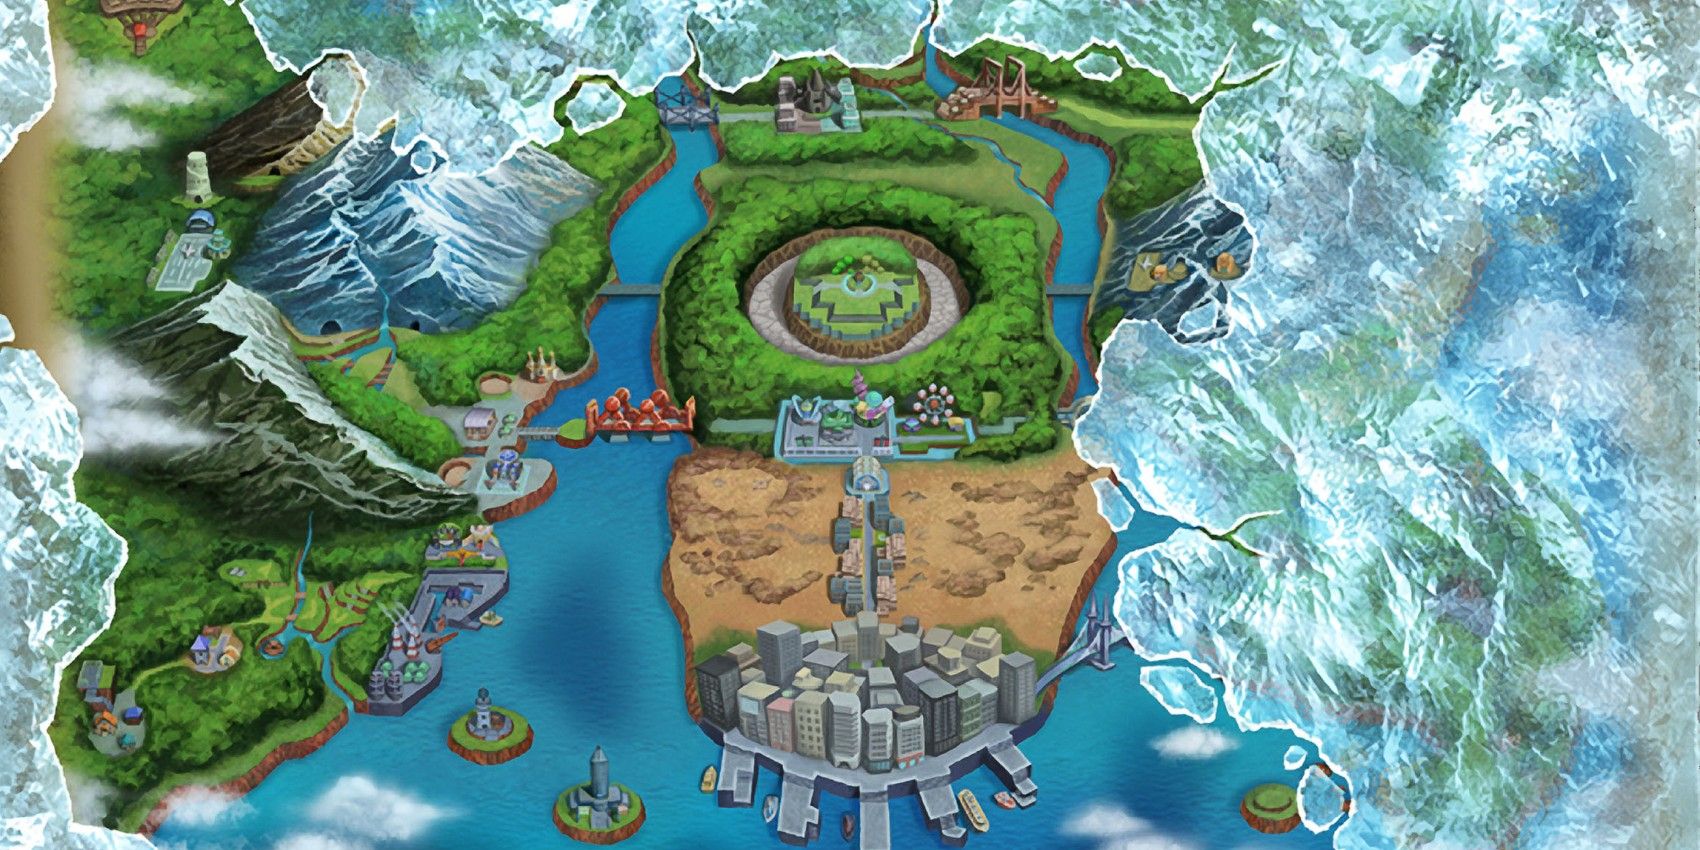 Defog HM Location in Pokémon BDSP